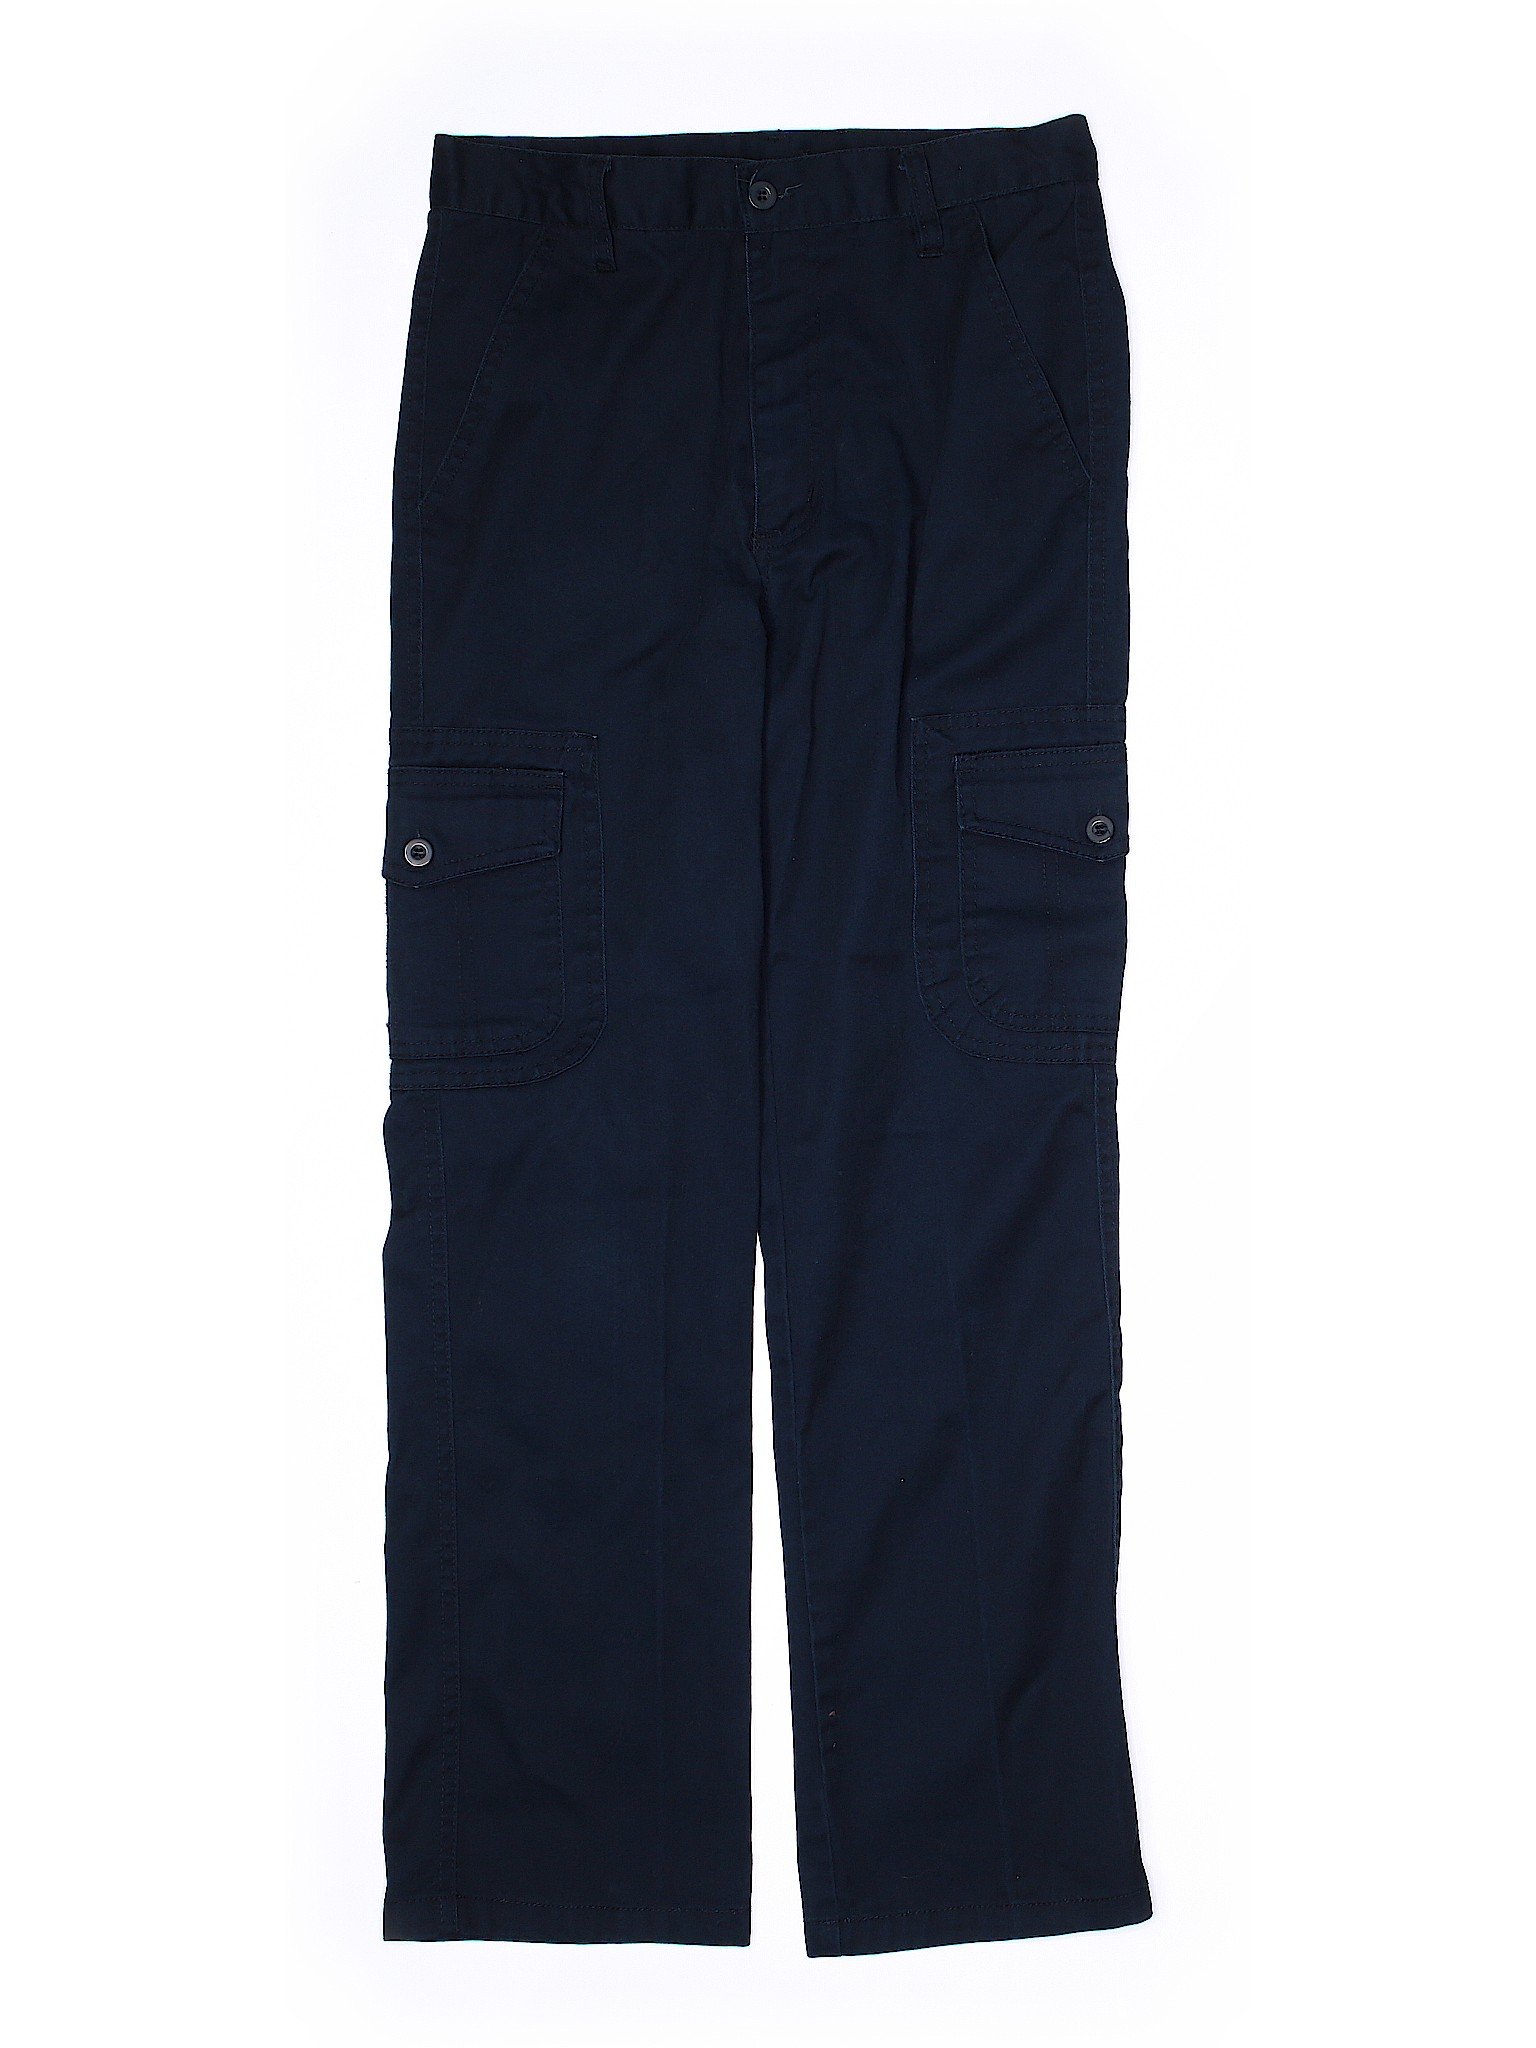 GS115 Boys Blue Cargo Pants 16 | eBay